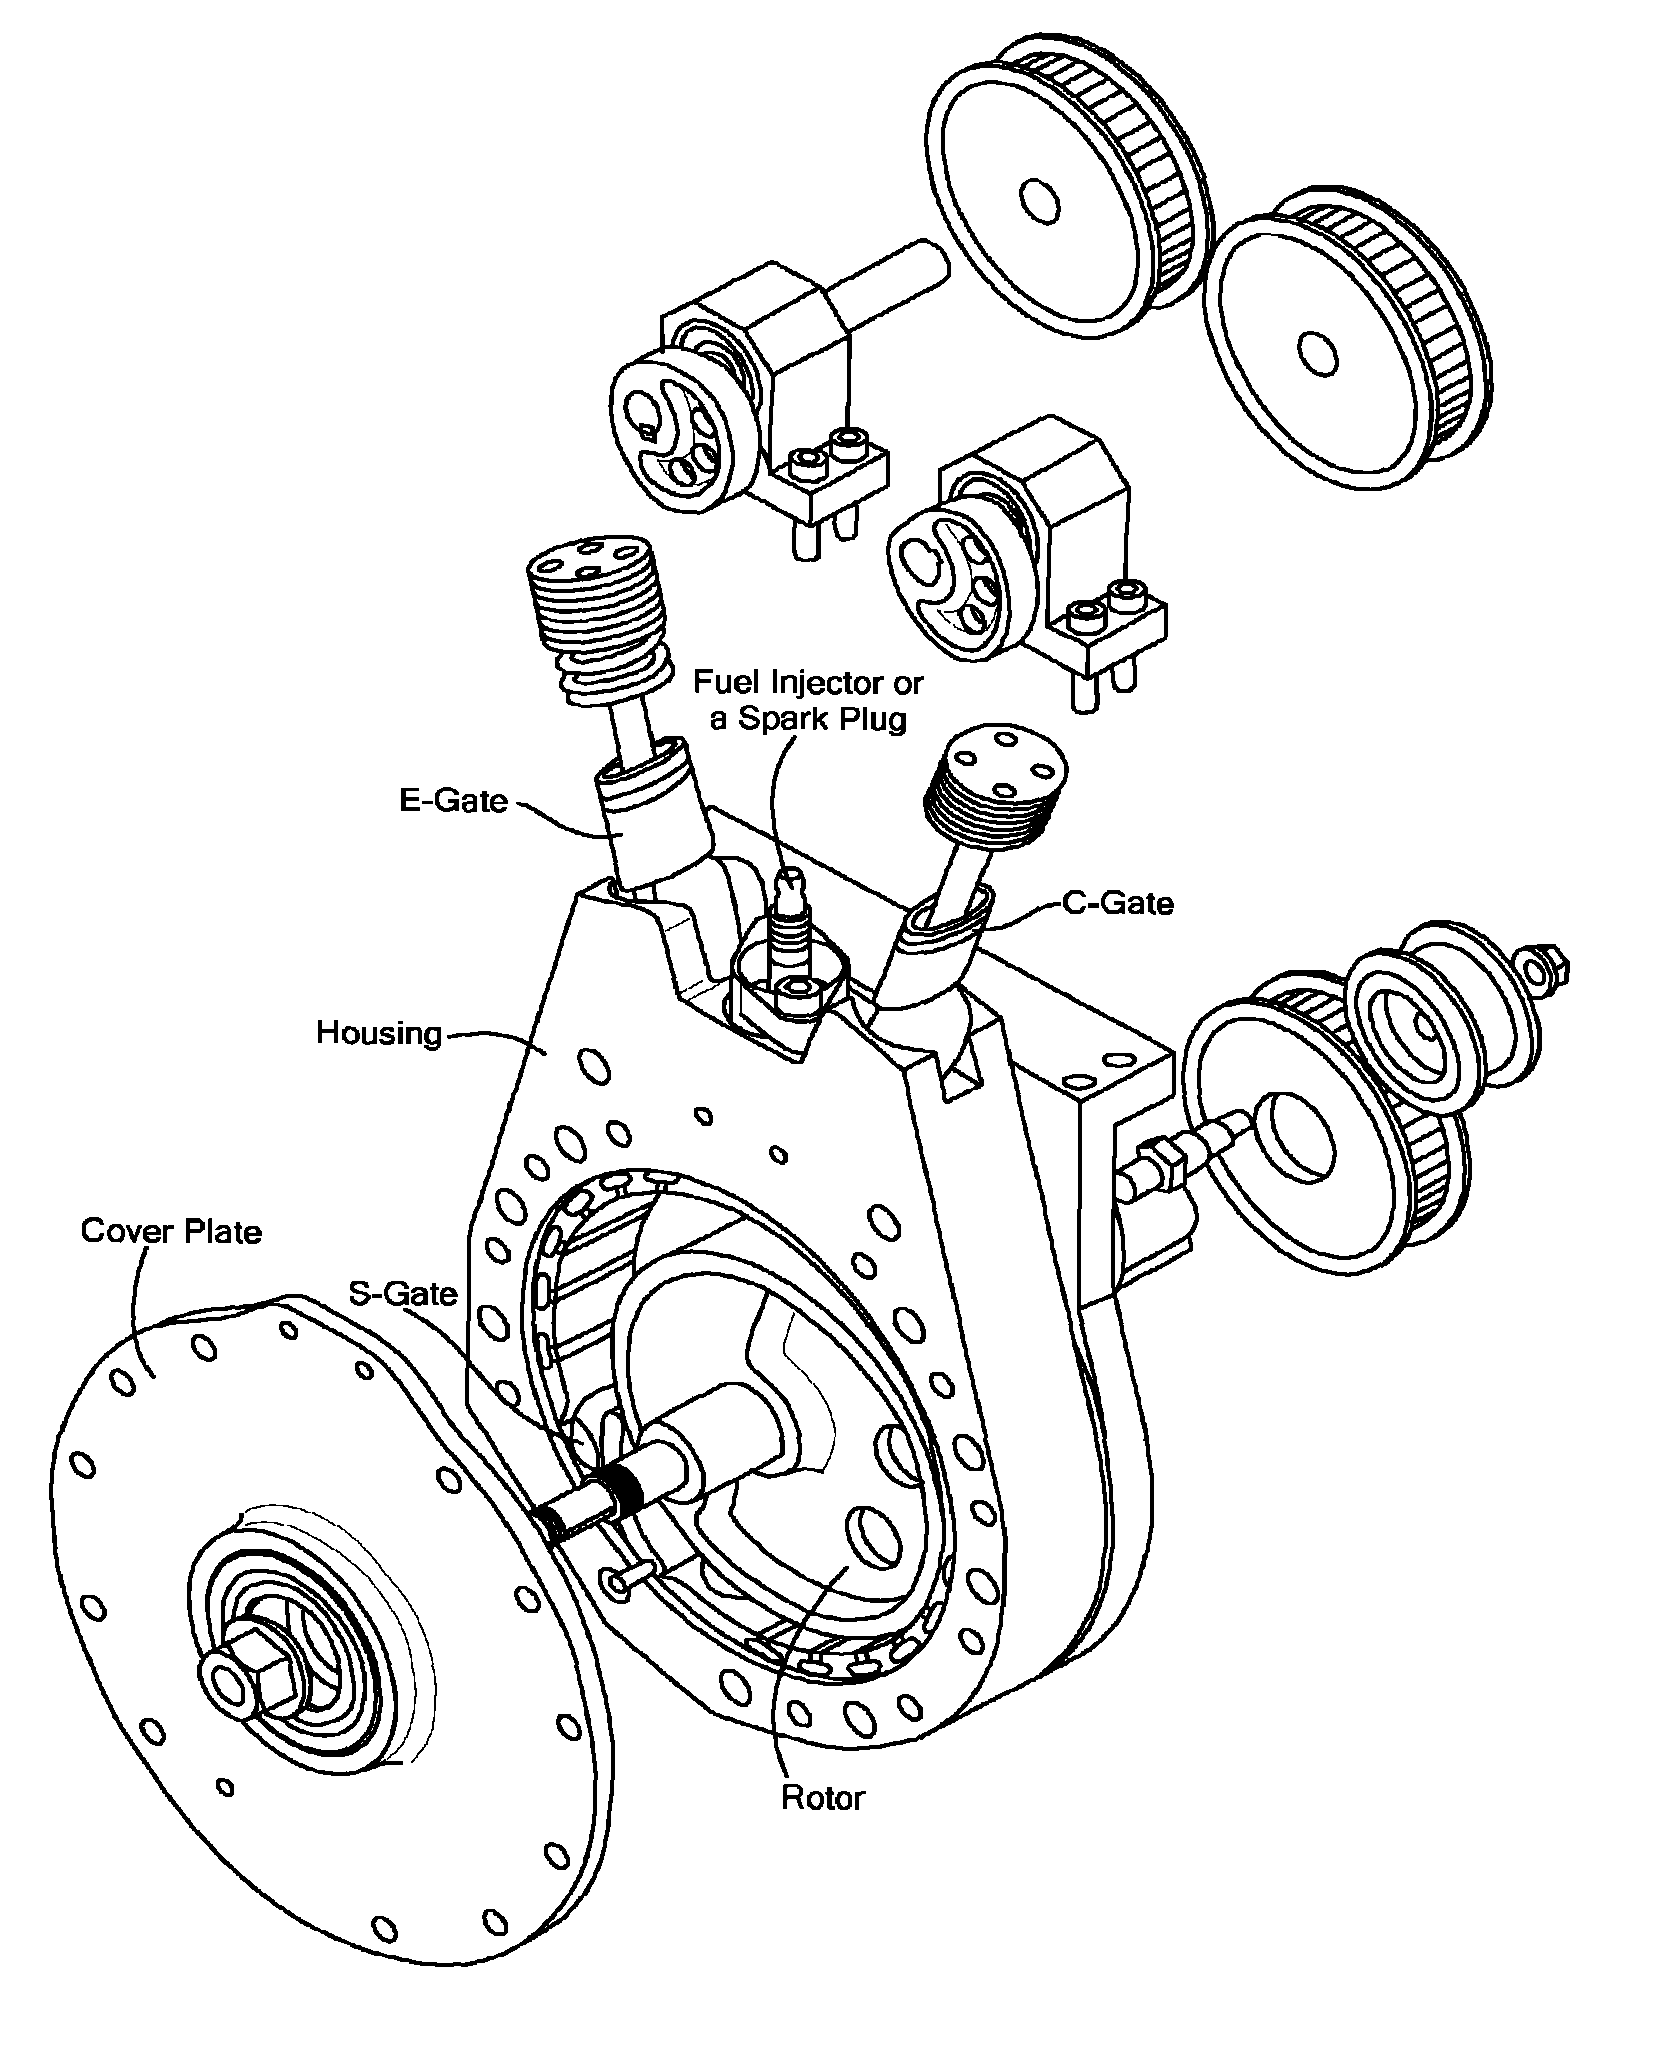 Isochoric heat addition engines and methods